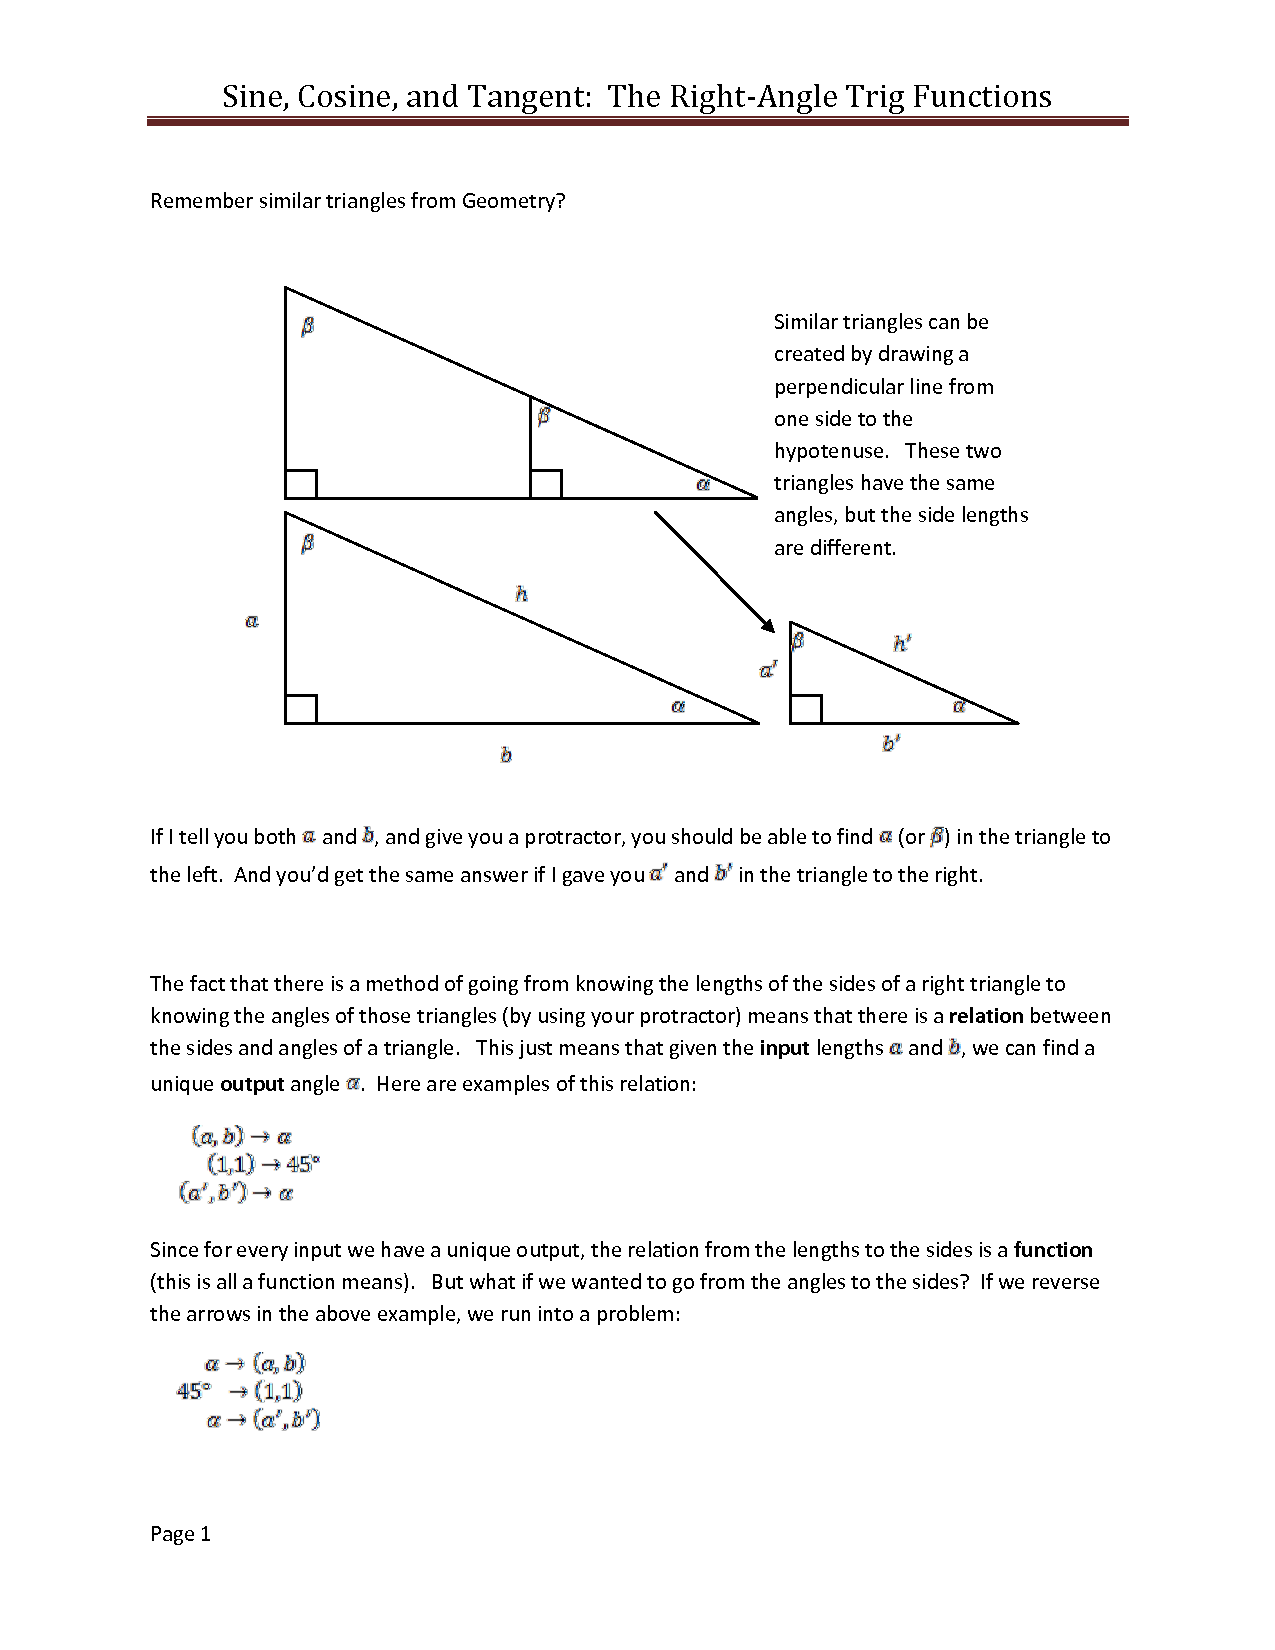 trigonometry-word-problems-worksheet-answers